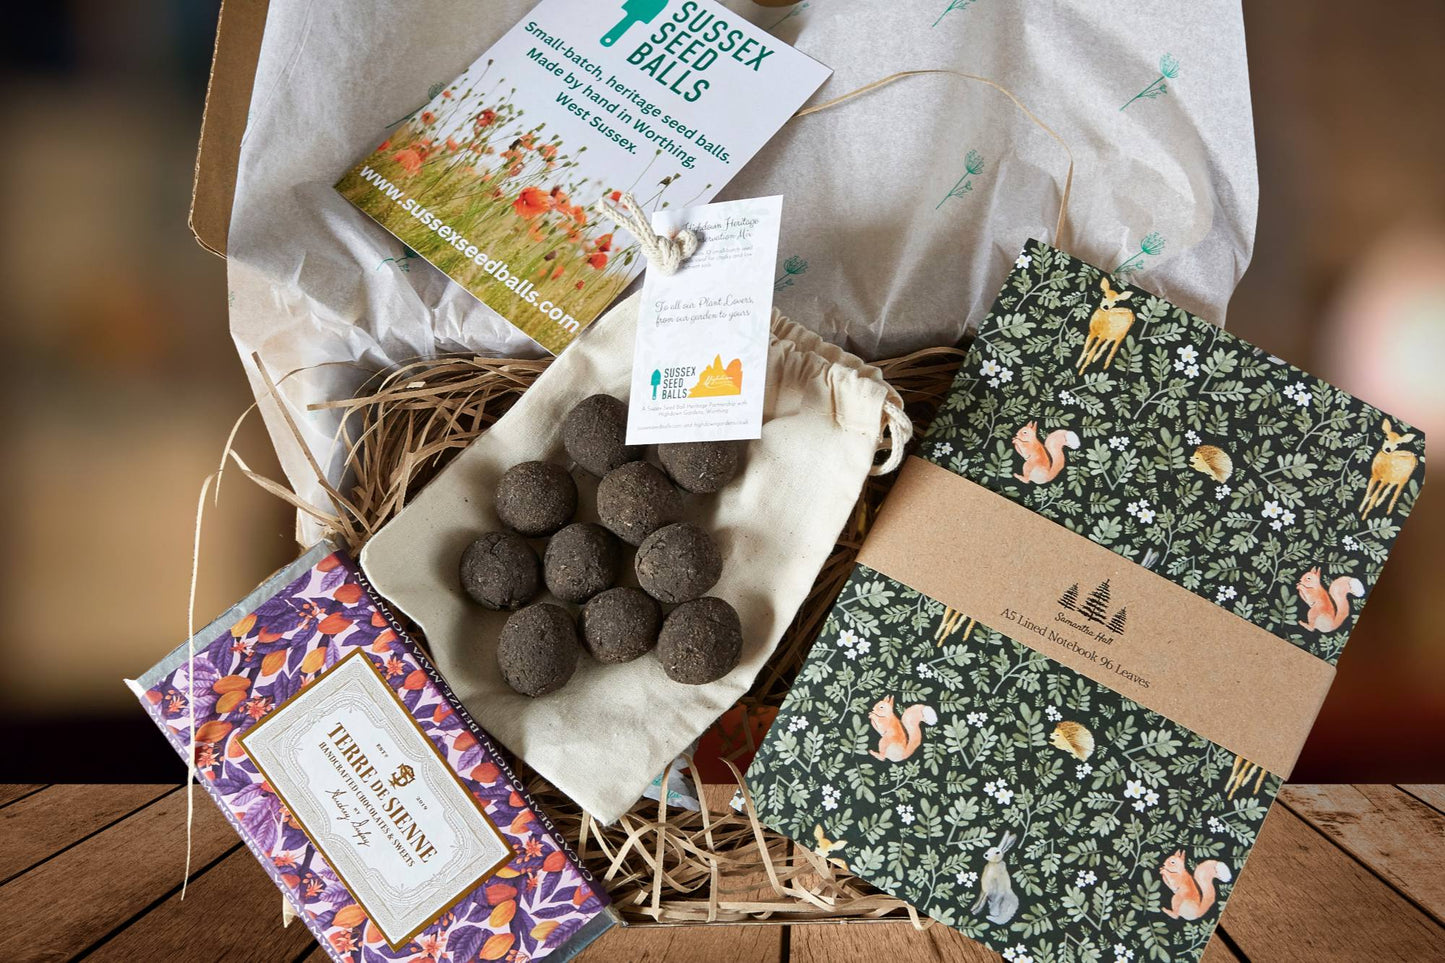 Worthing Botanicals Gardeners' Edit Gift Box